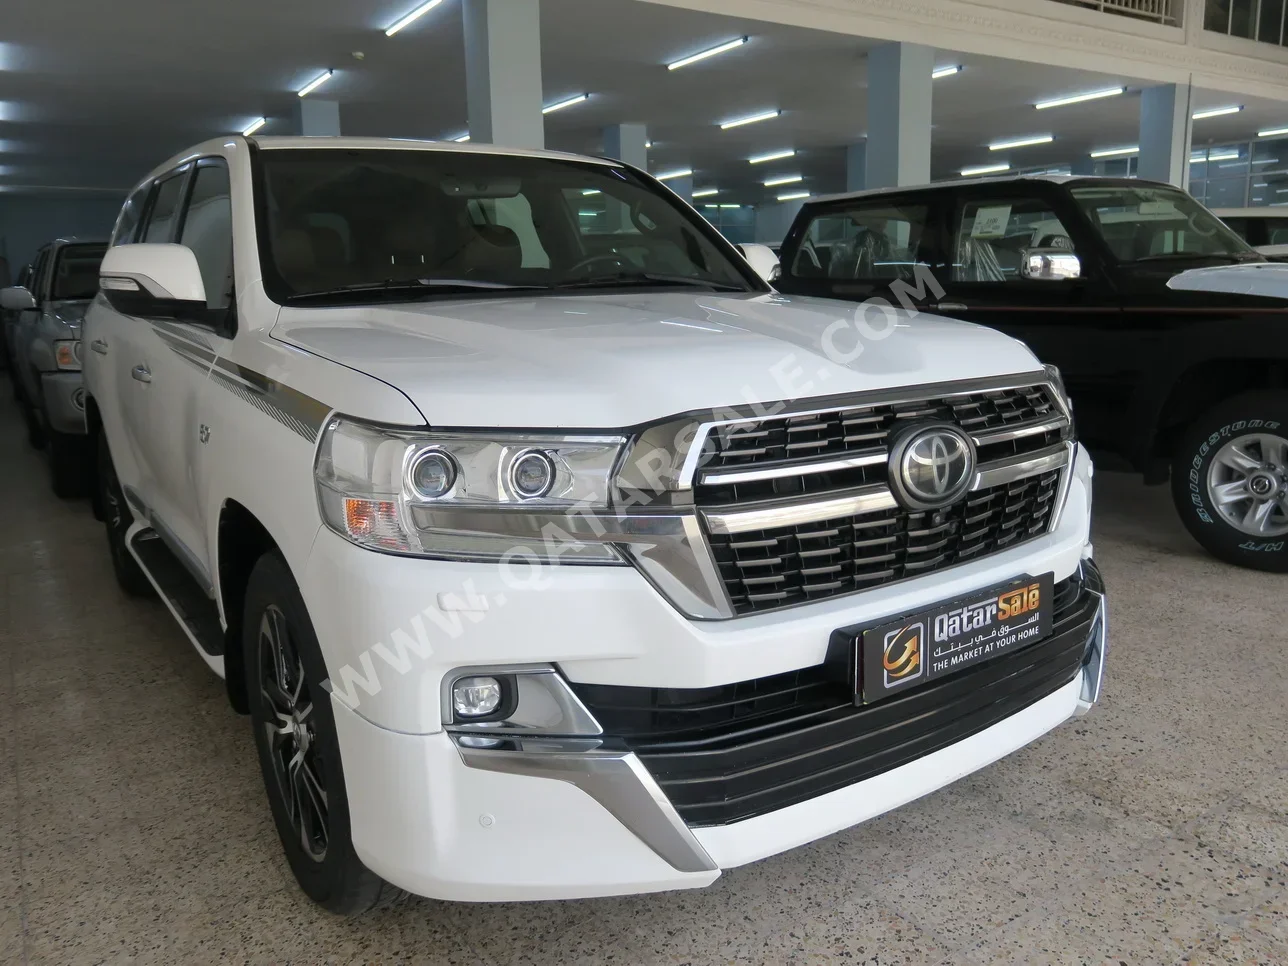 Toyota  Land Cruiser  VXR  2021  Automatic  143,000 Km  8 Cylinder  Four Wheel Drive (4WD)  SUV  White